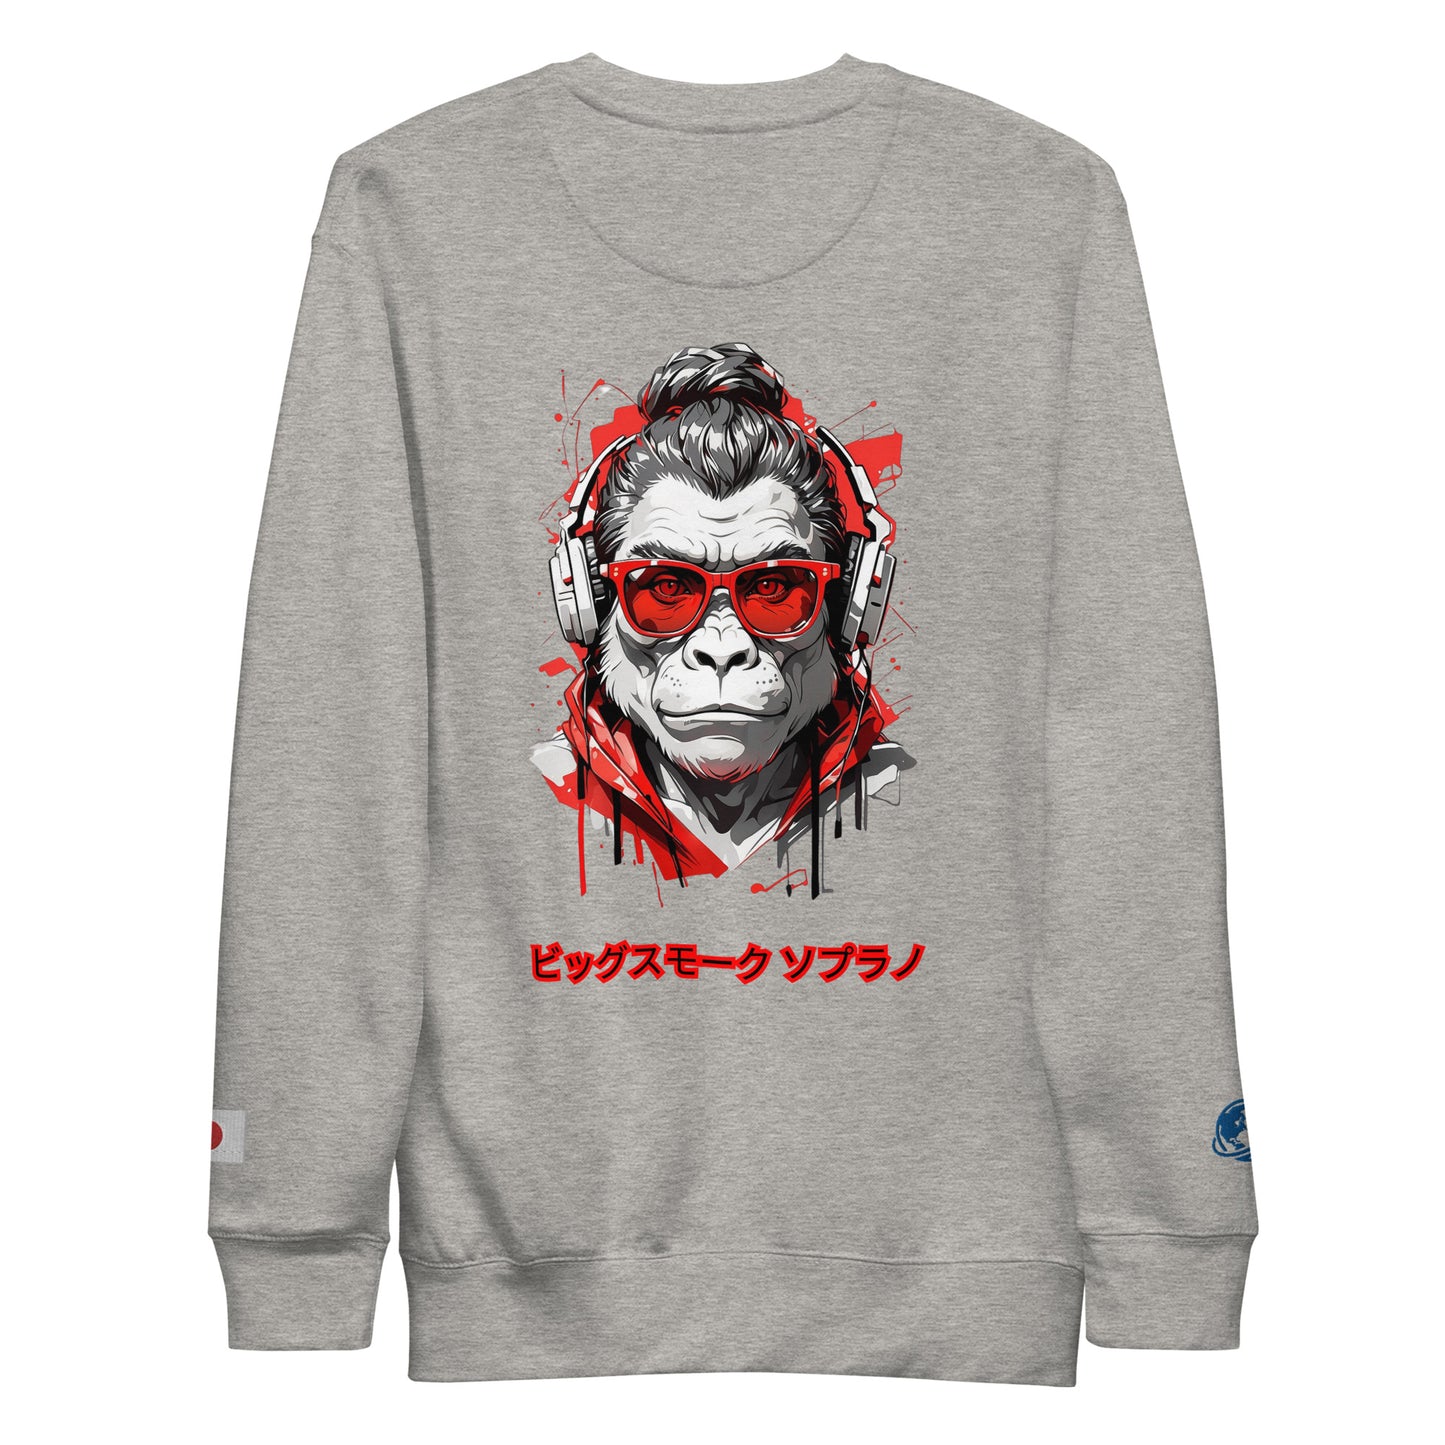 BigSmoke Soprano Clothing: BigSmoke Soprano Worldwide Collection: Paid the Cost Sweatshirt (Japan Edition)